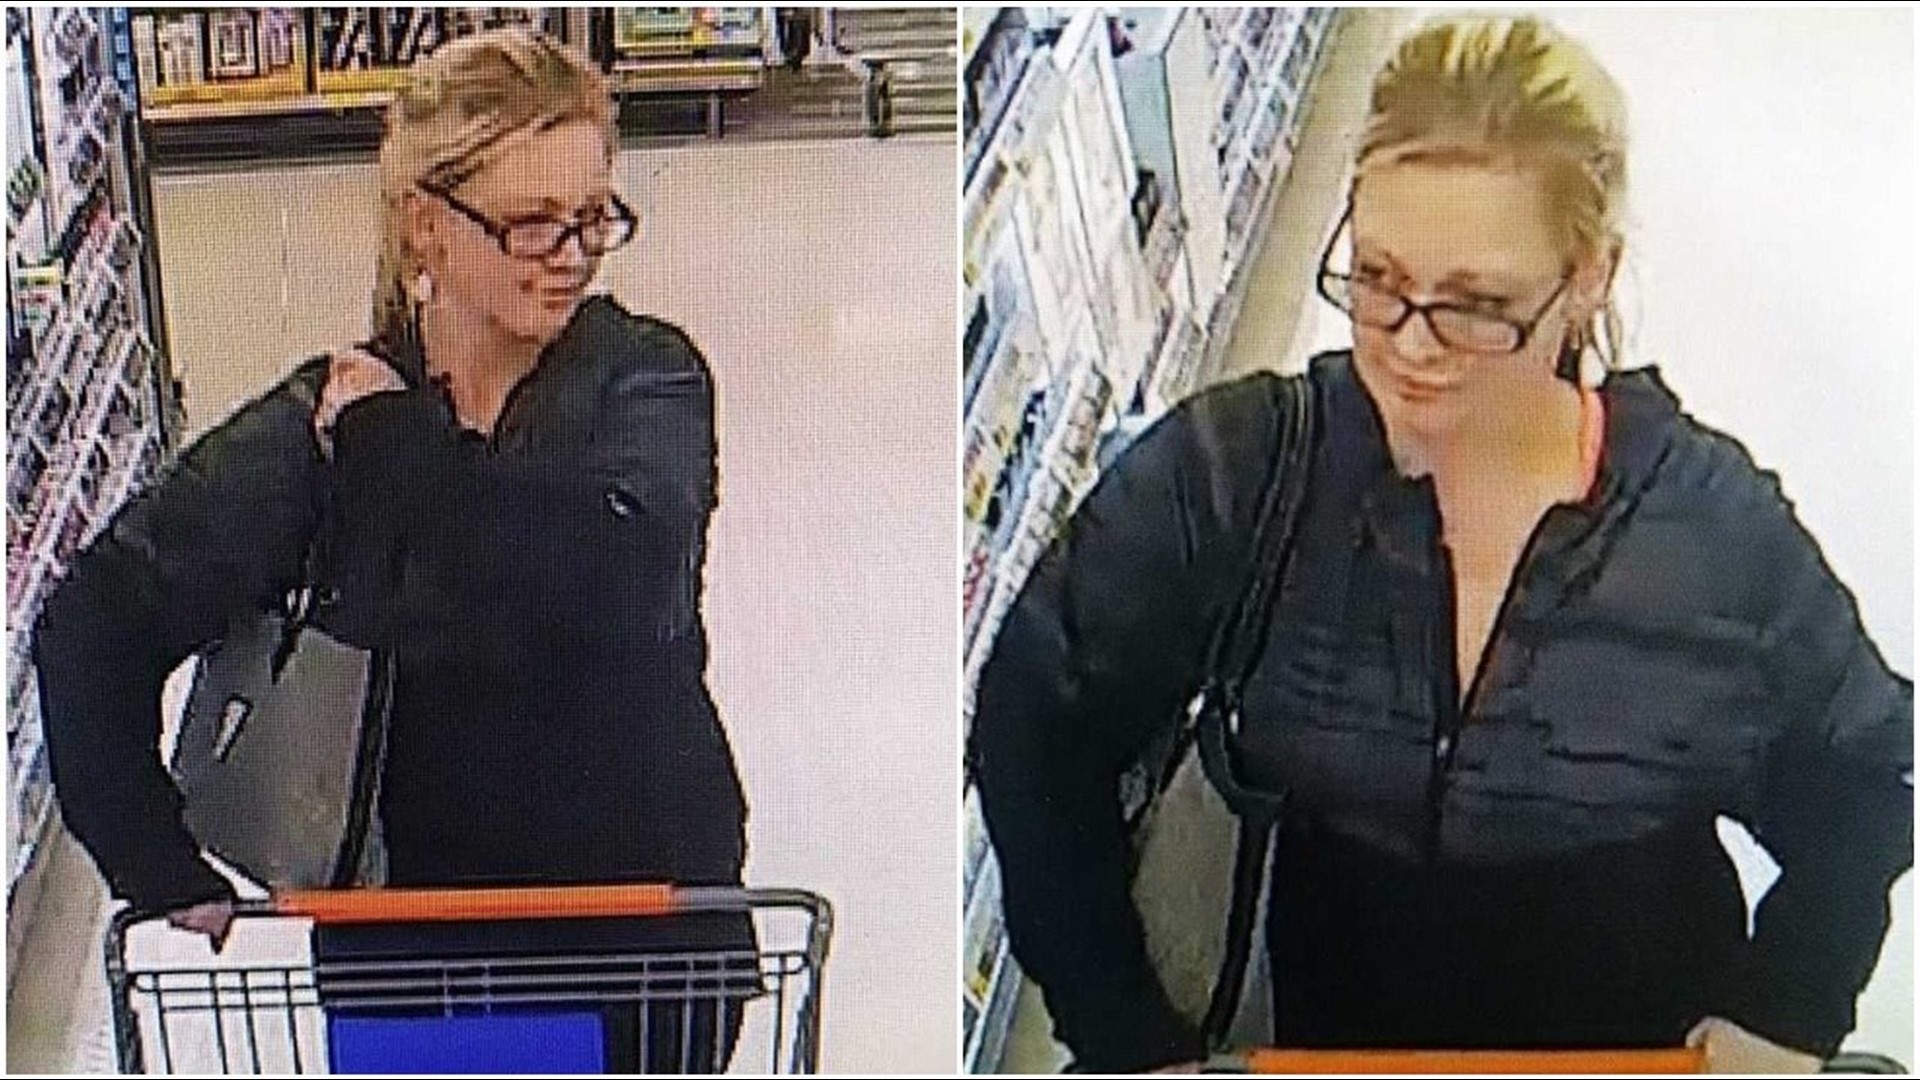 Spokane Valley Police Arrest Woman Caught On Camera Using Stolen Credit Card